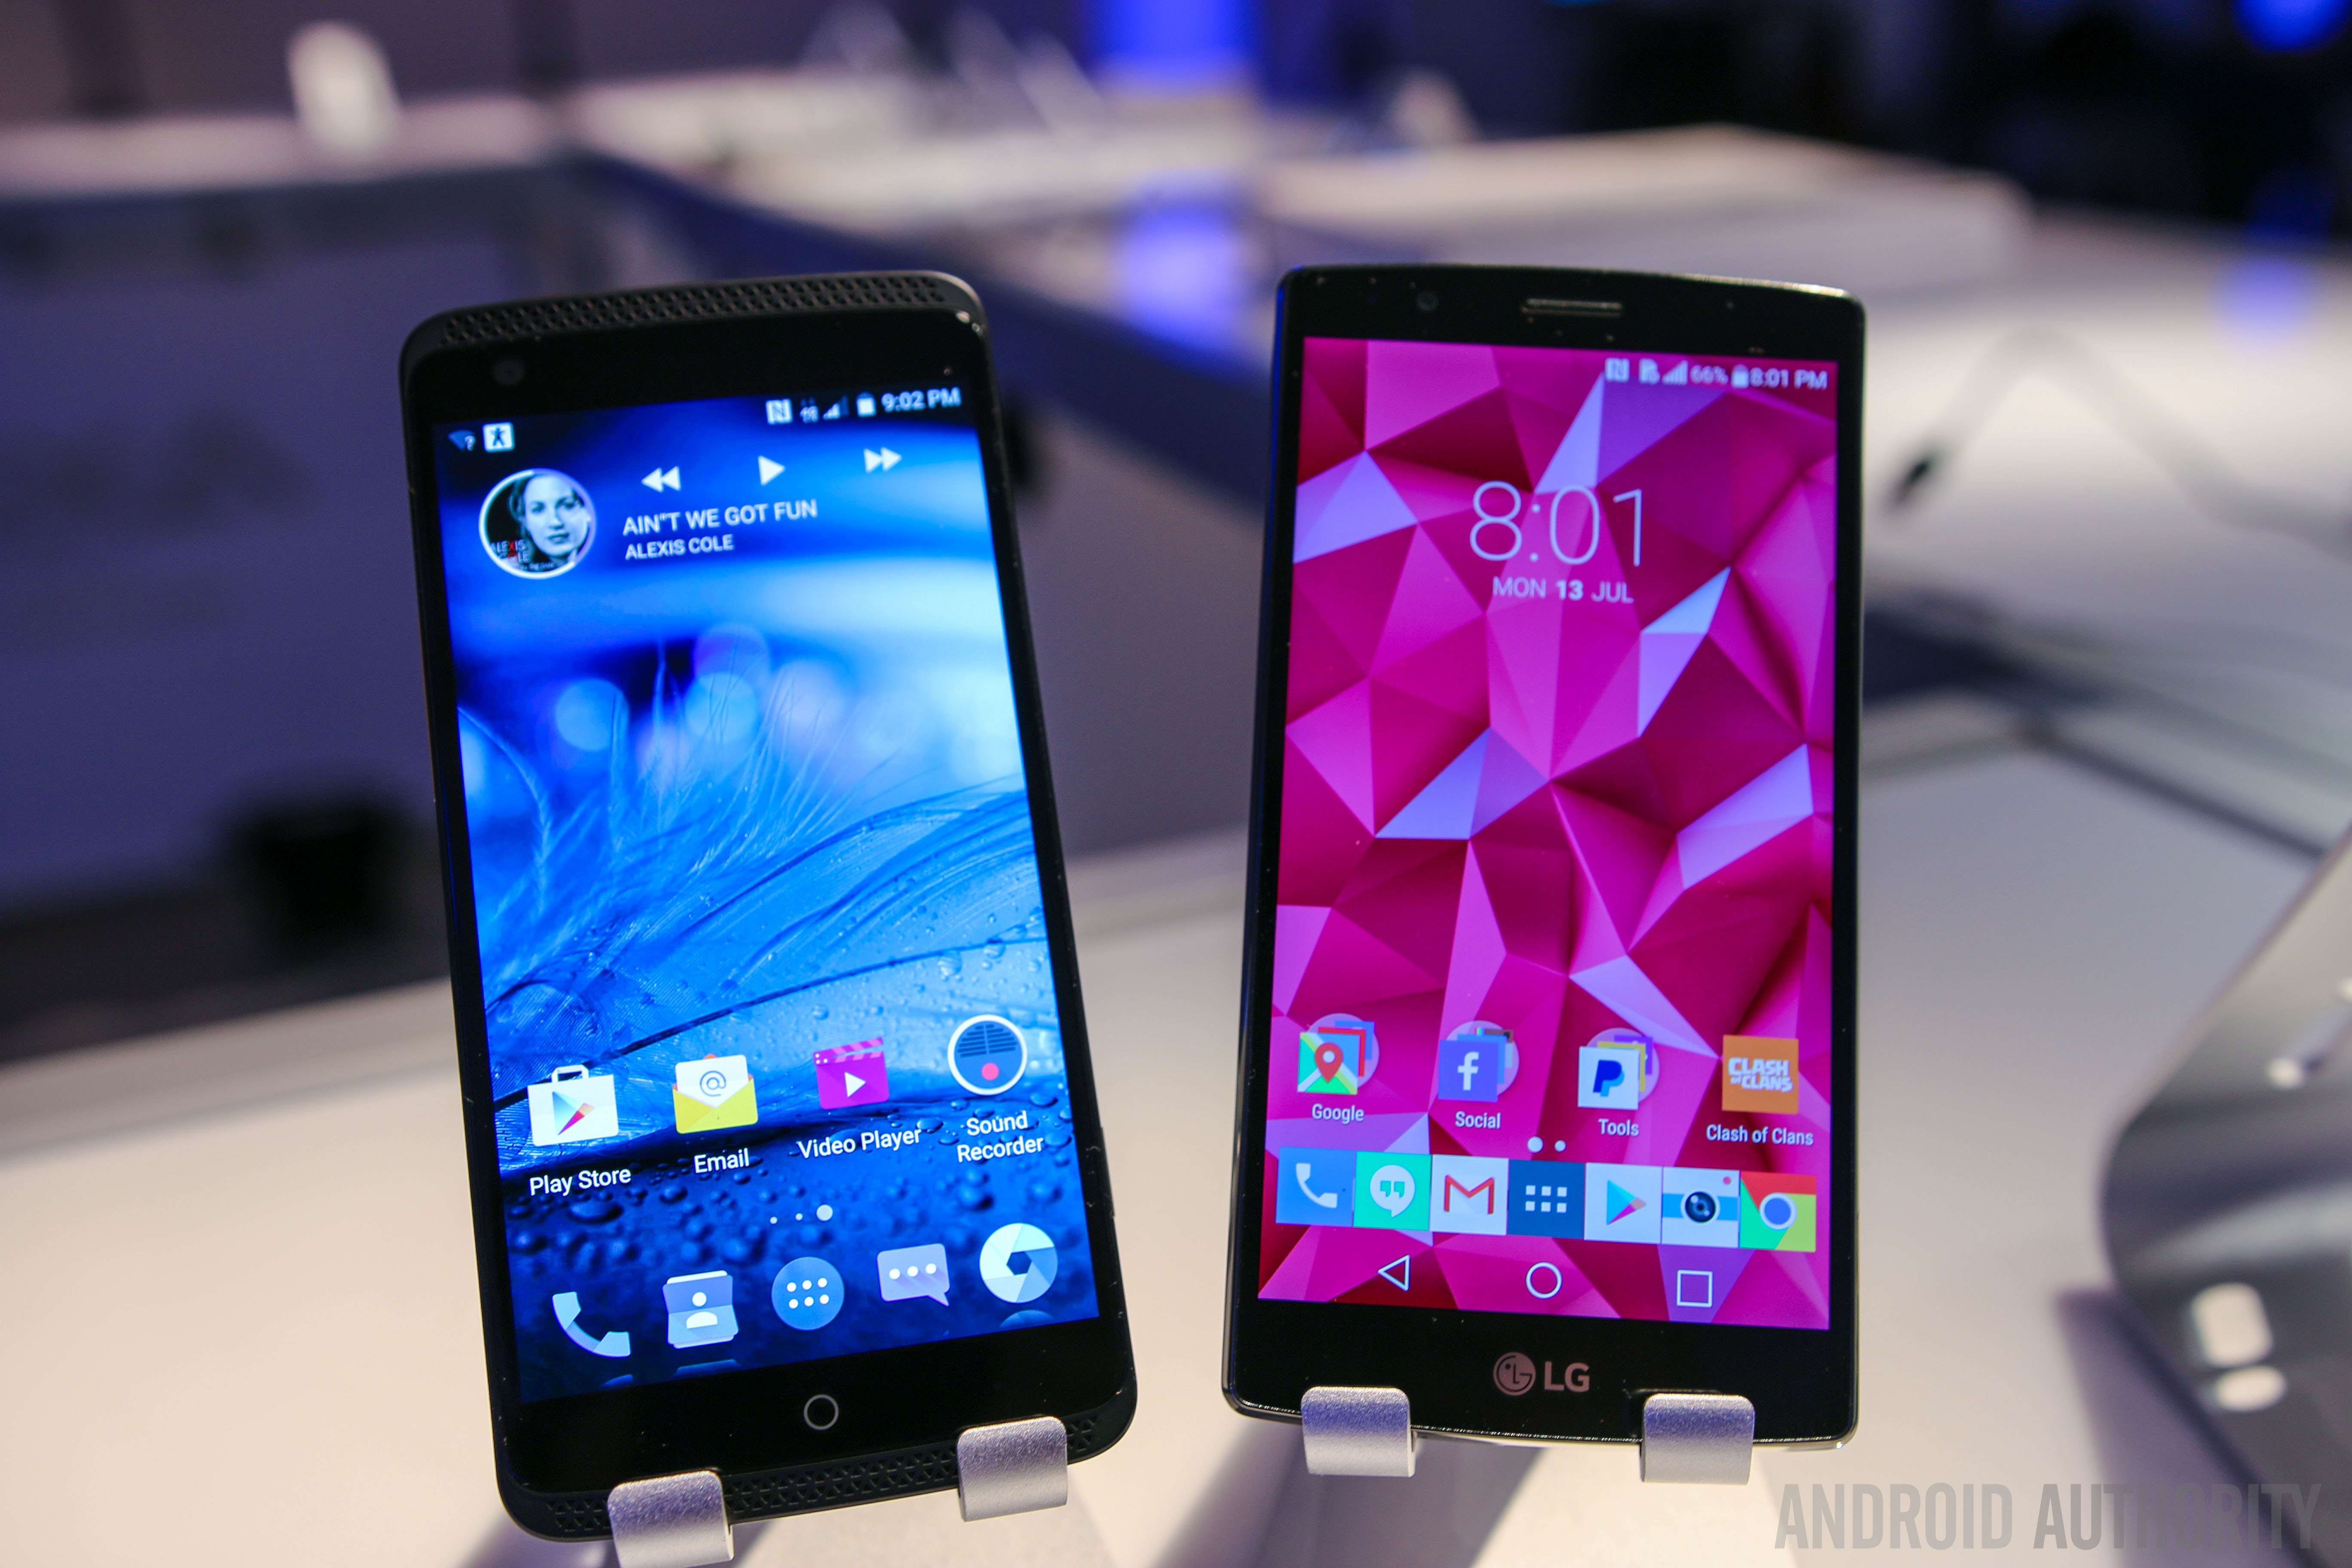 ZTE AXON Phone vs LG G4 Quick Look-4